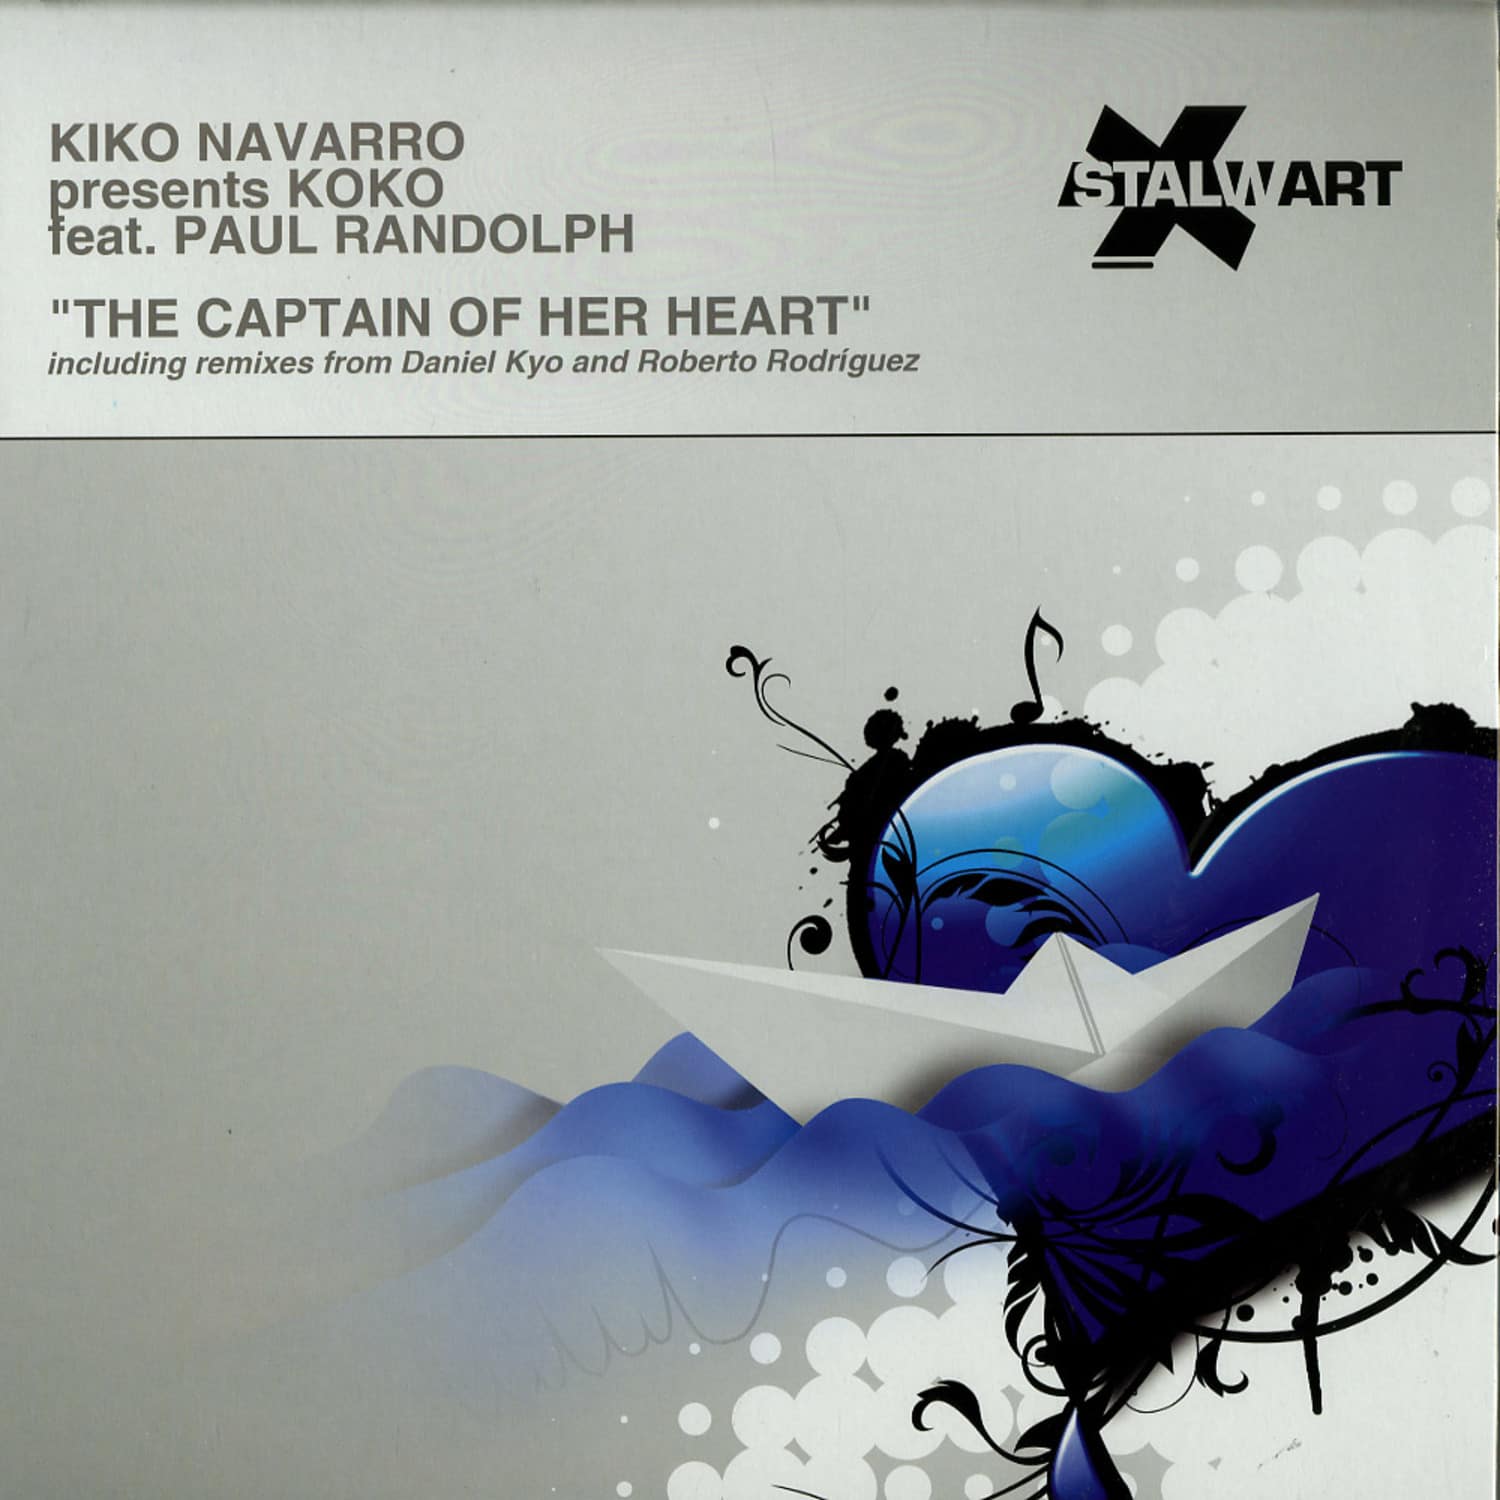 Kiko Navarro pres. Koko - THE CAPTAIN OF HER HEART